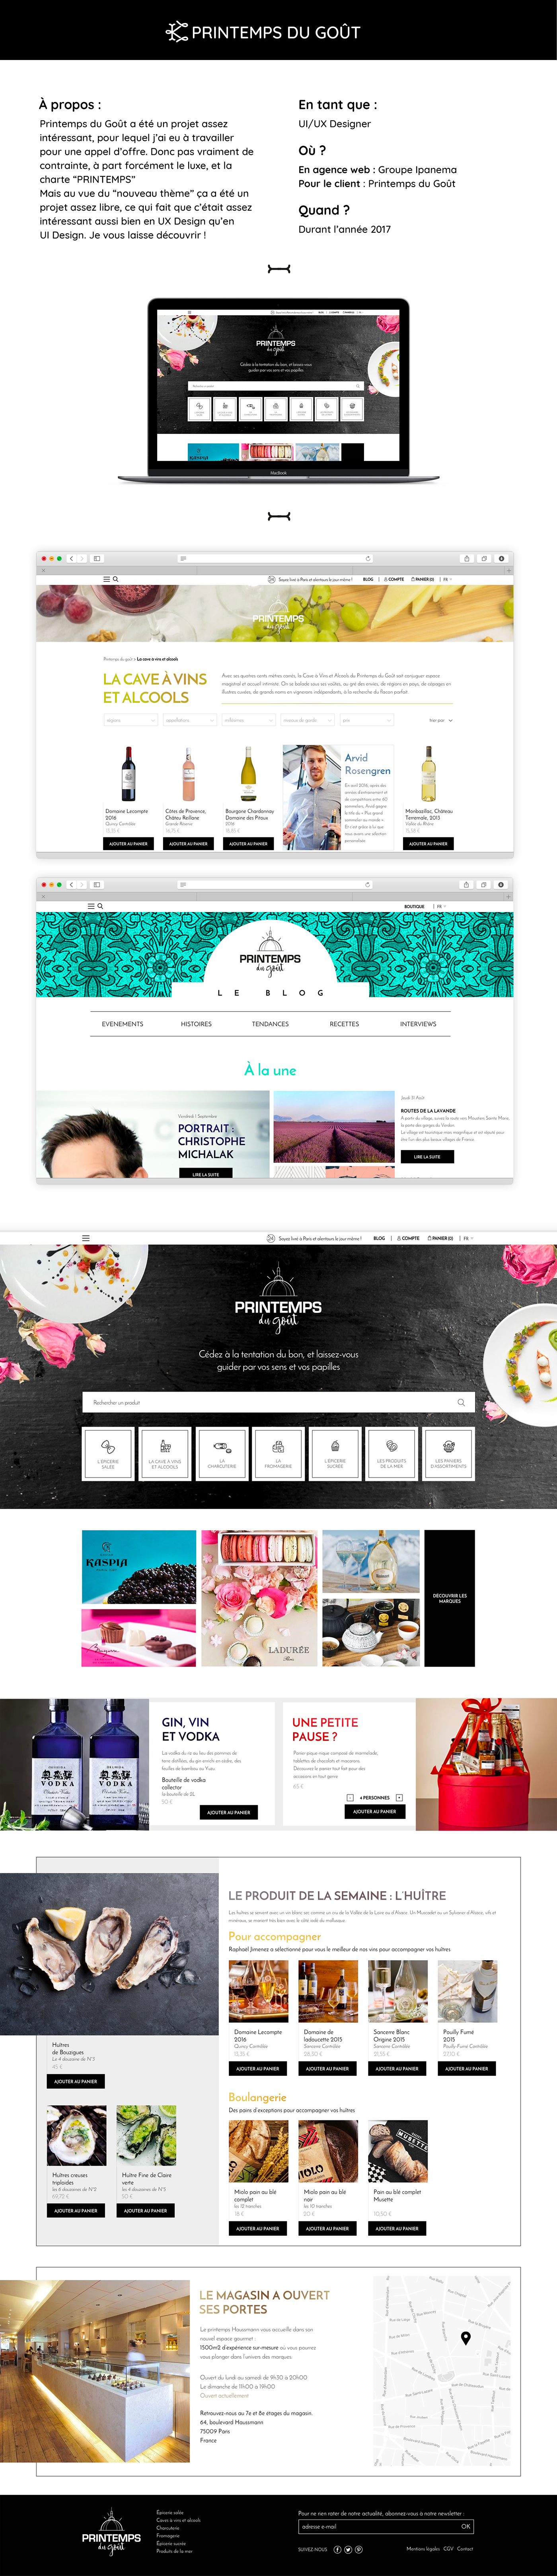 printemps luxe epicerie Ecommerce uidesign uxdesign Web design Website